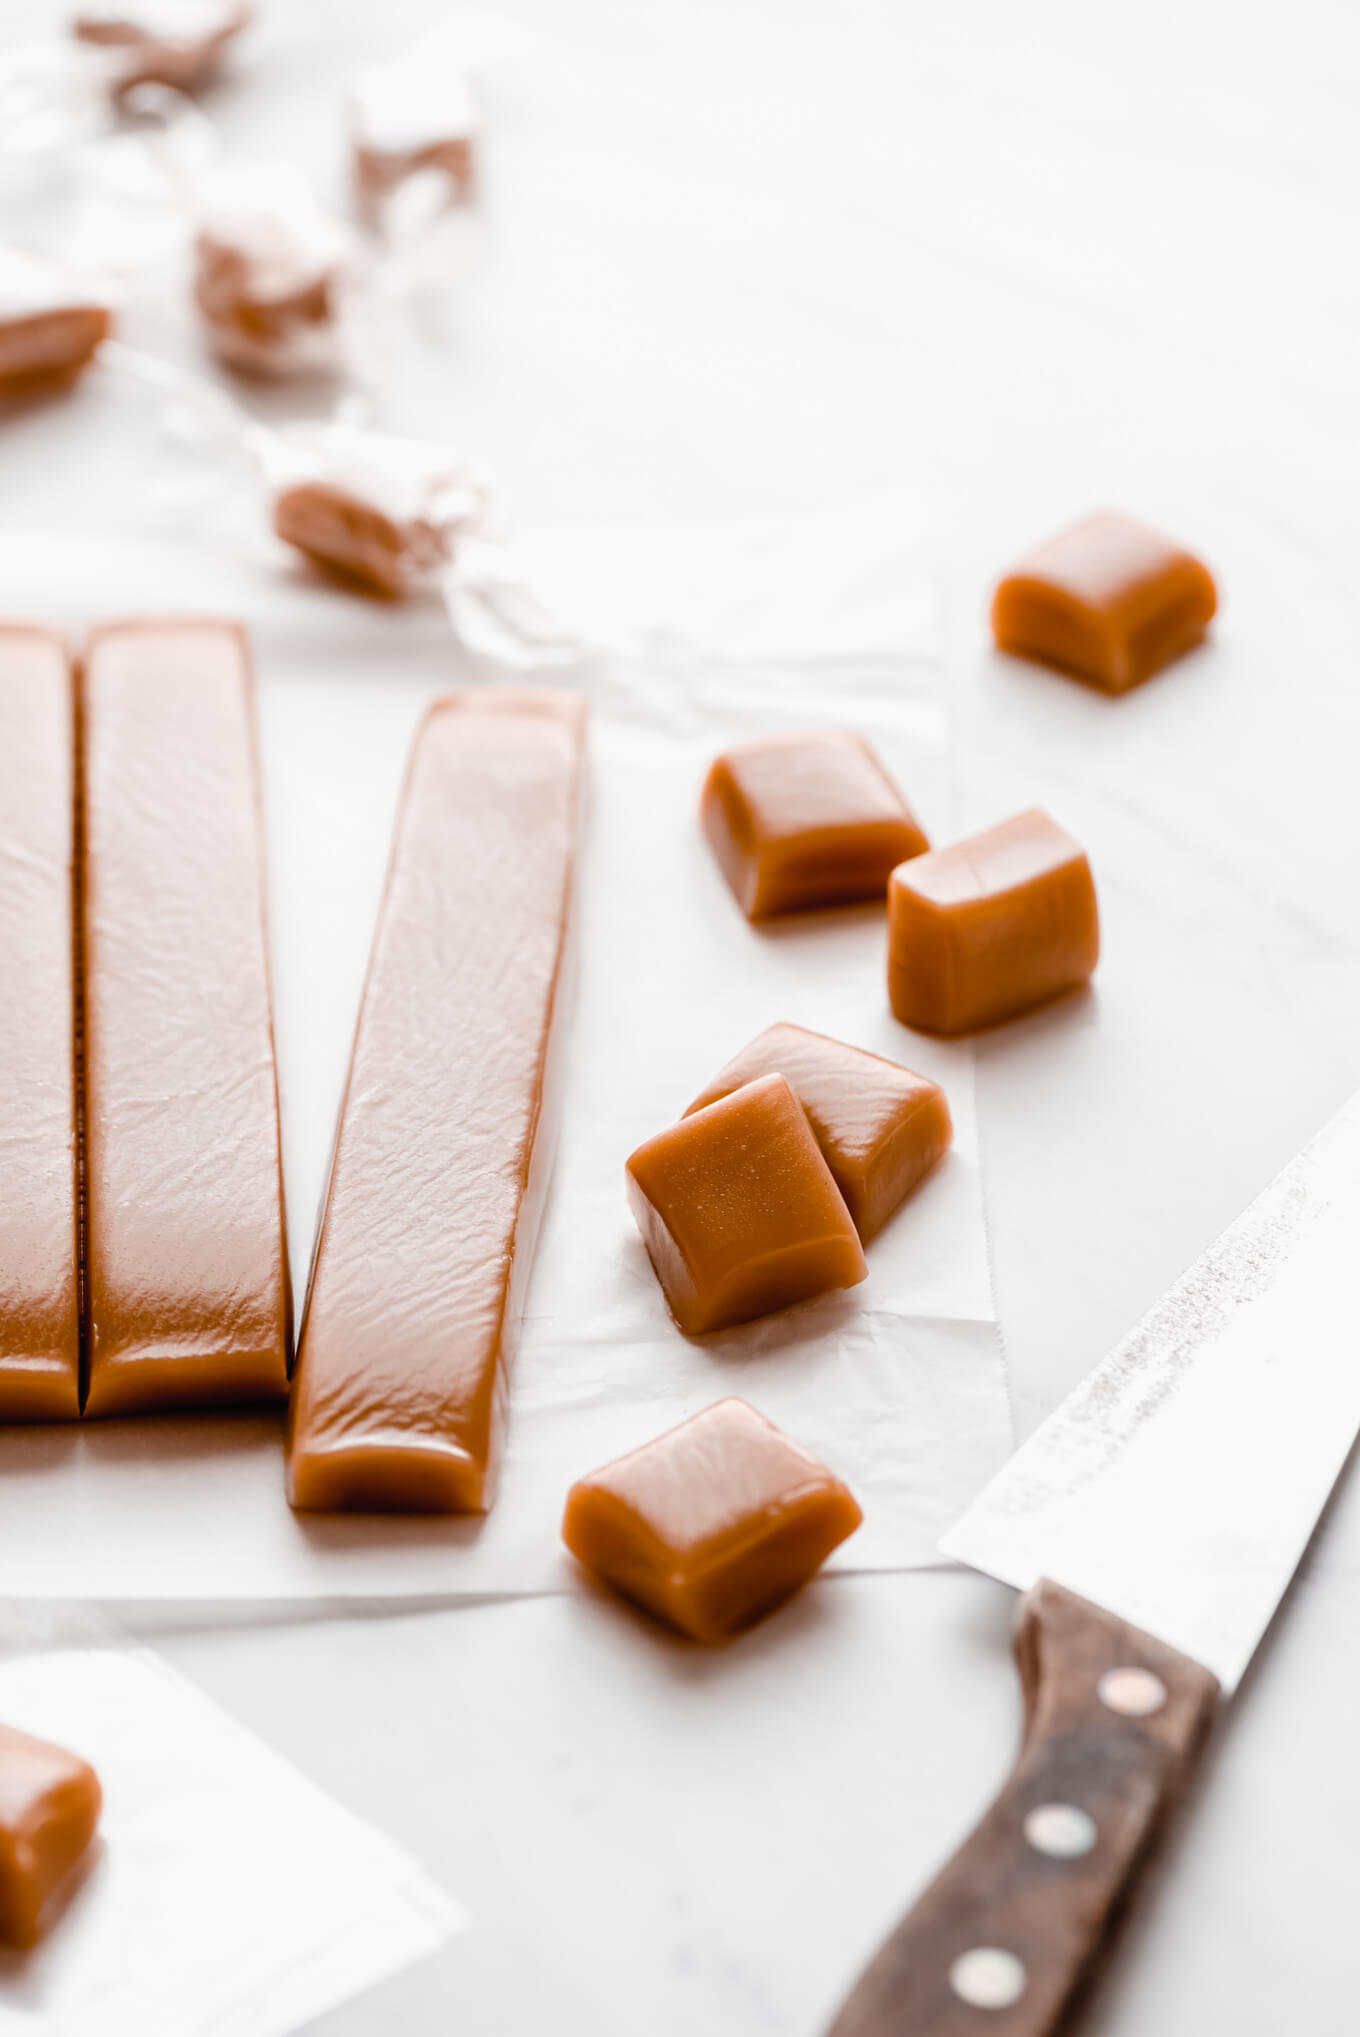 Homemade caramel cut up into squares ready to wrap.